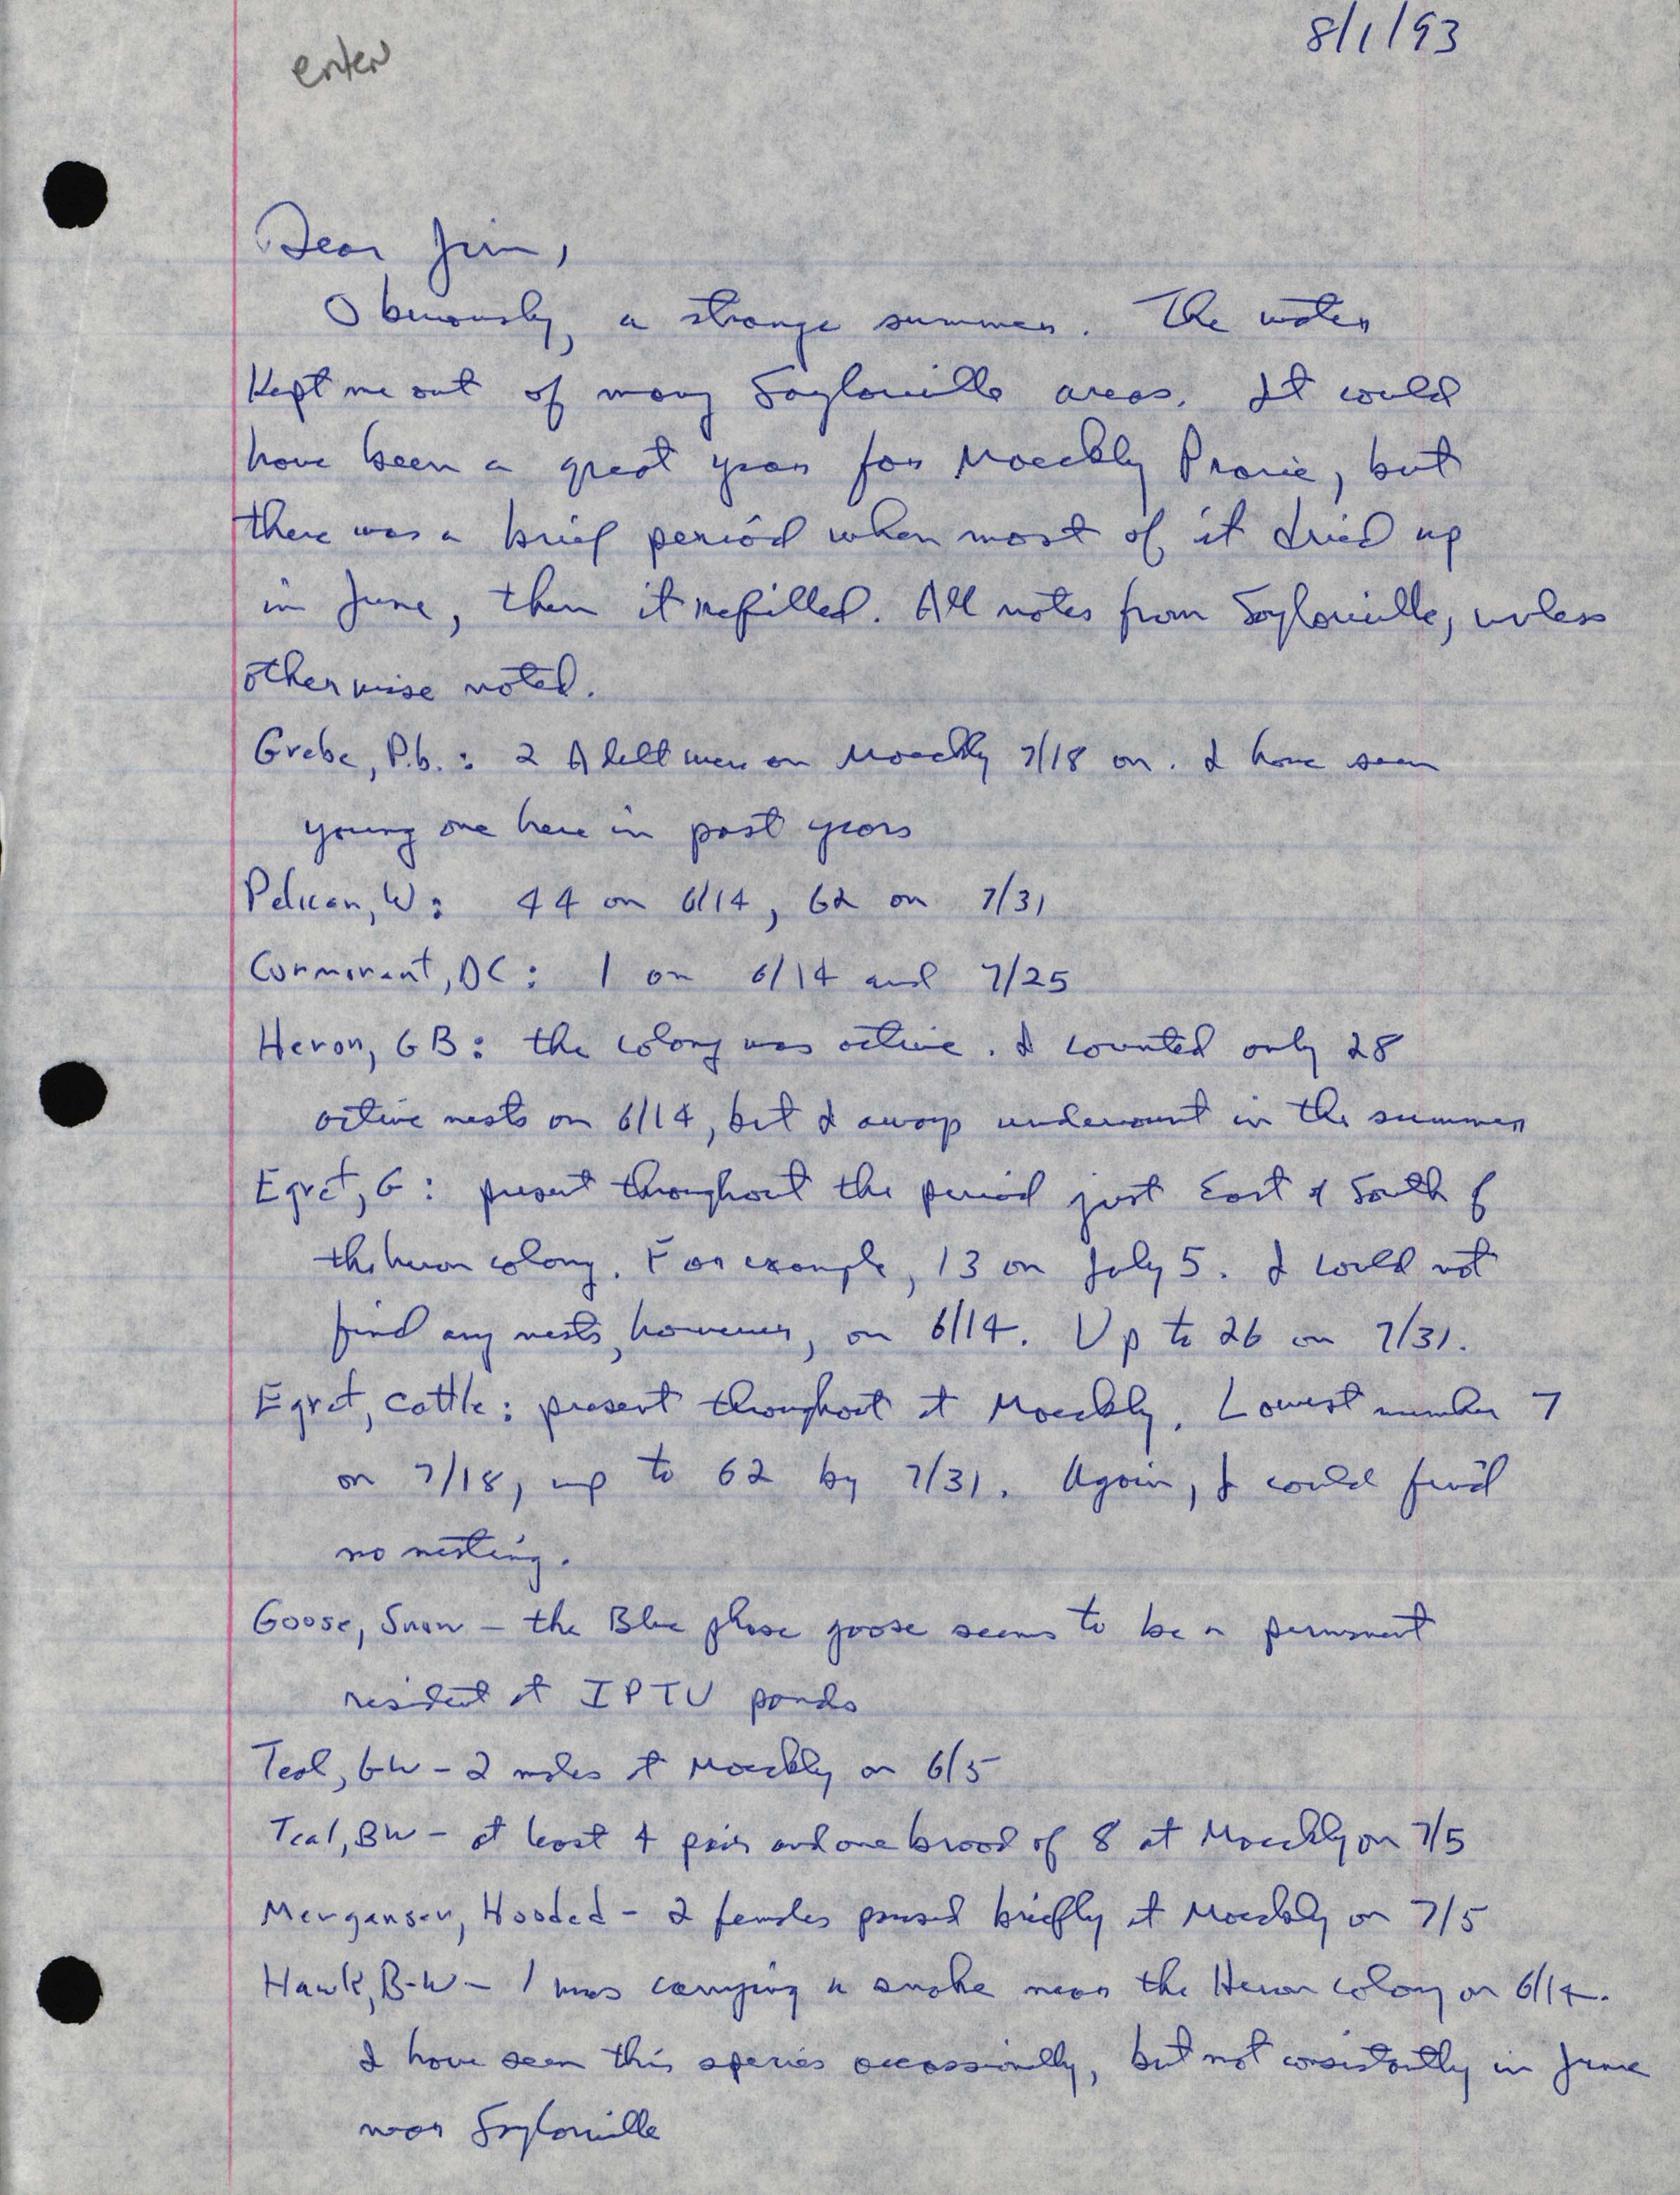 Bery Engebretsen letter to James J. Dinsmore regarding summer bird sightings, August 1, 1993